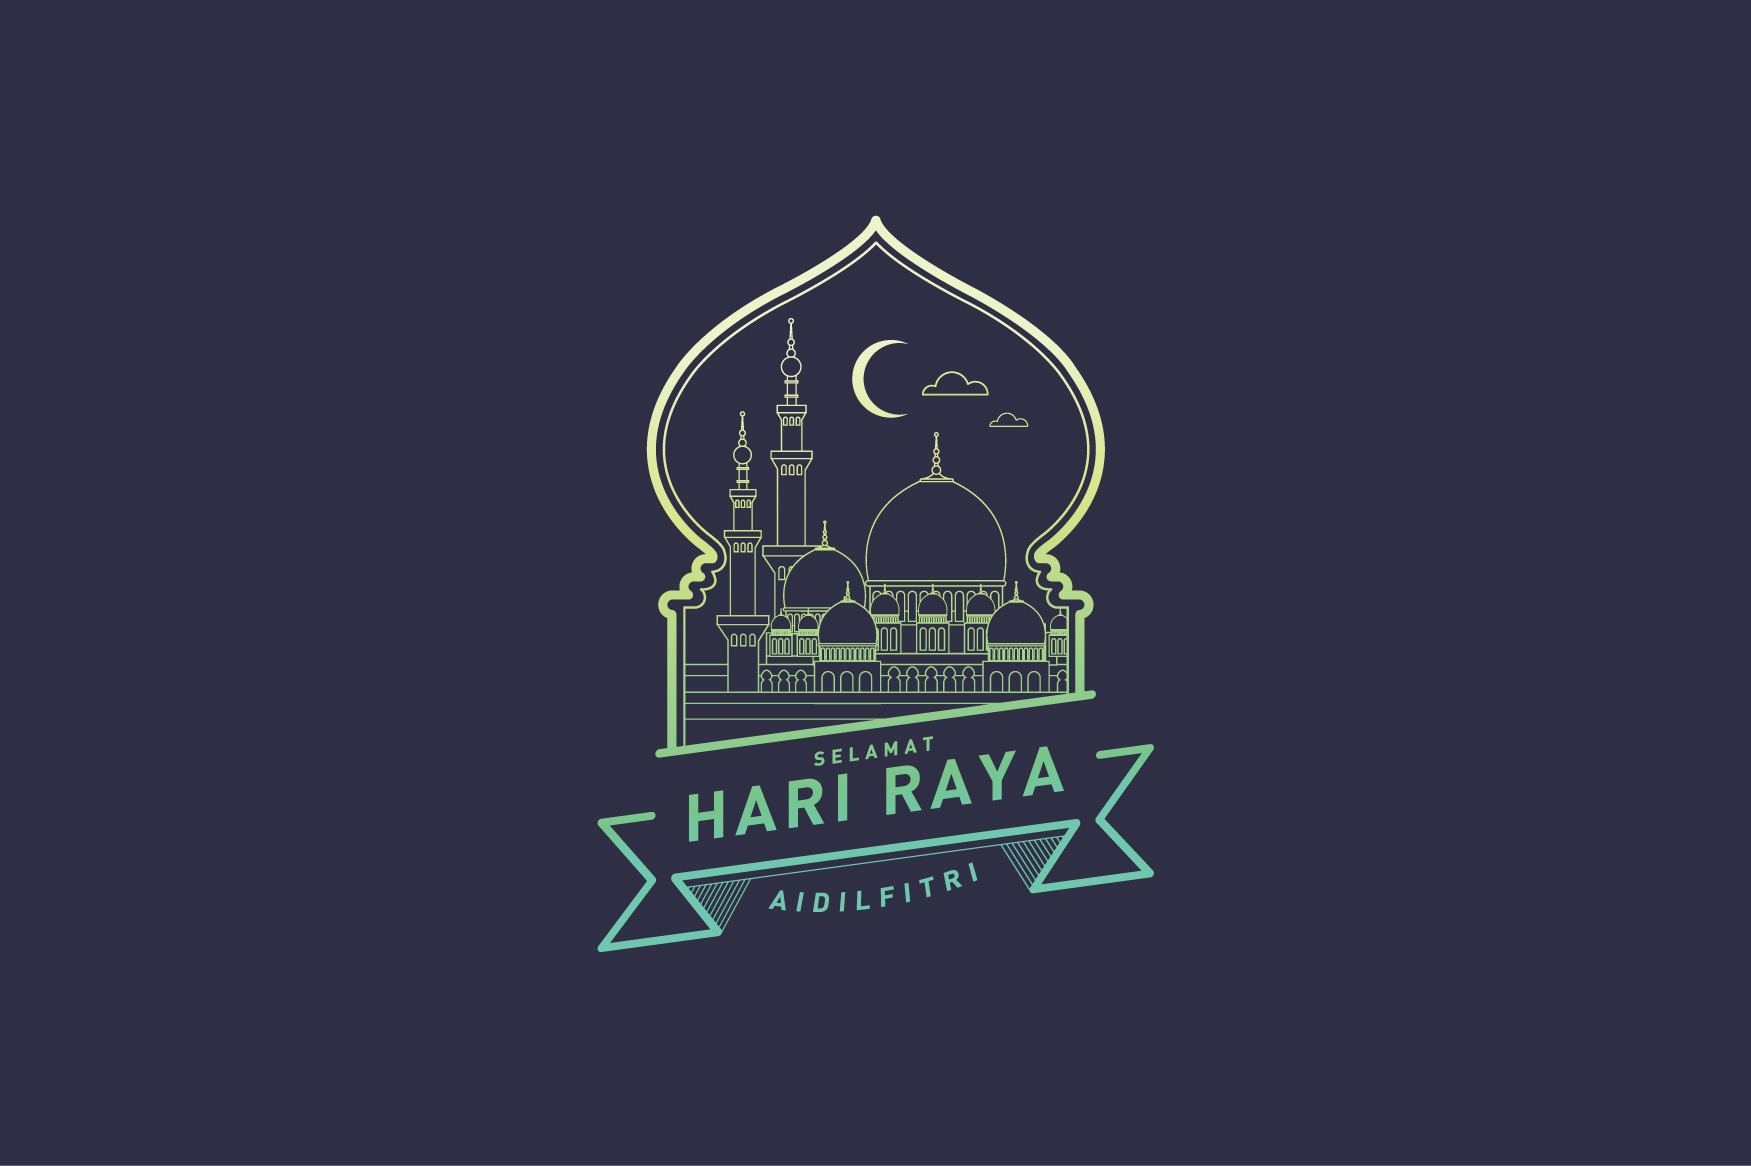 Sample Invitation Hari Raya Open House Image collections 